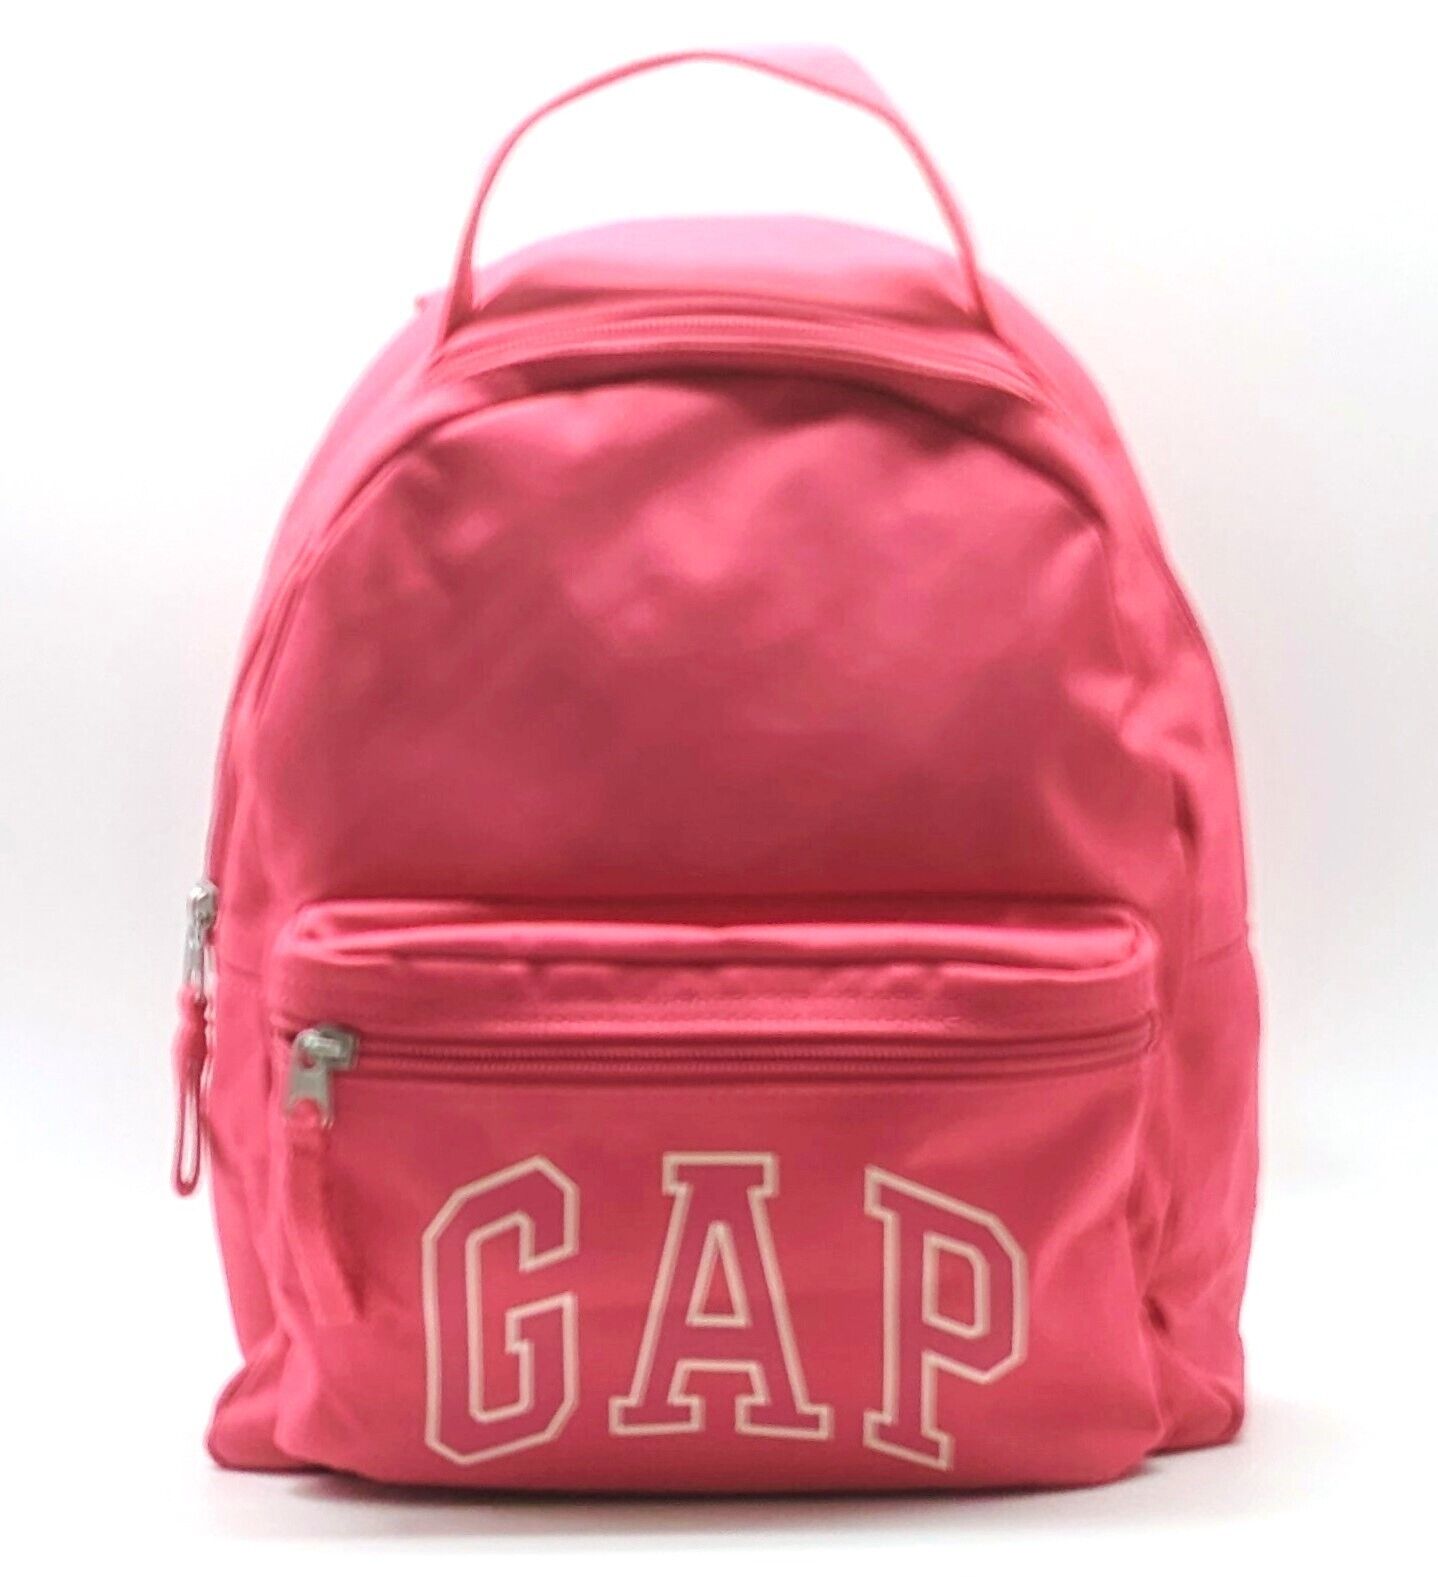 Gap Backpack Berkeley Hot Pink RRP £39